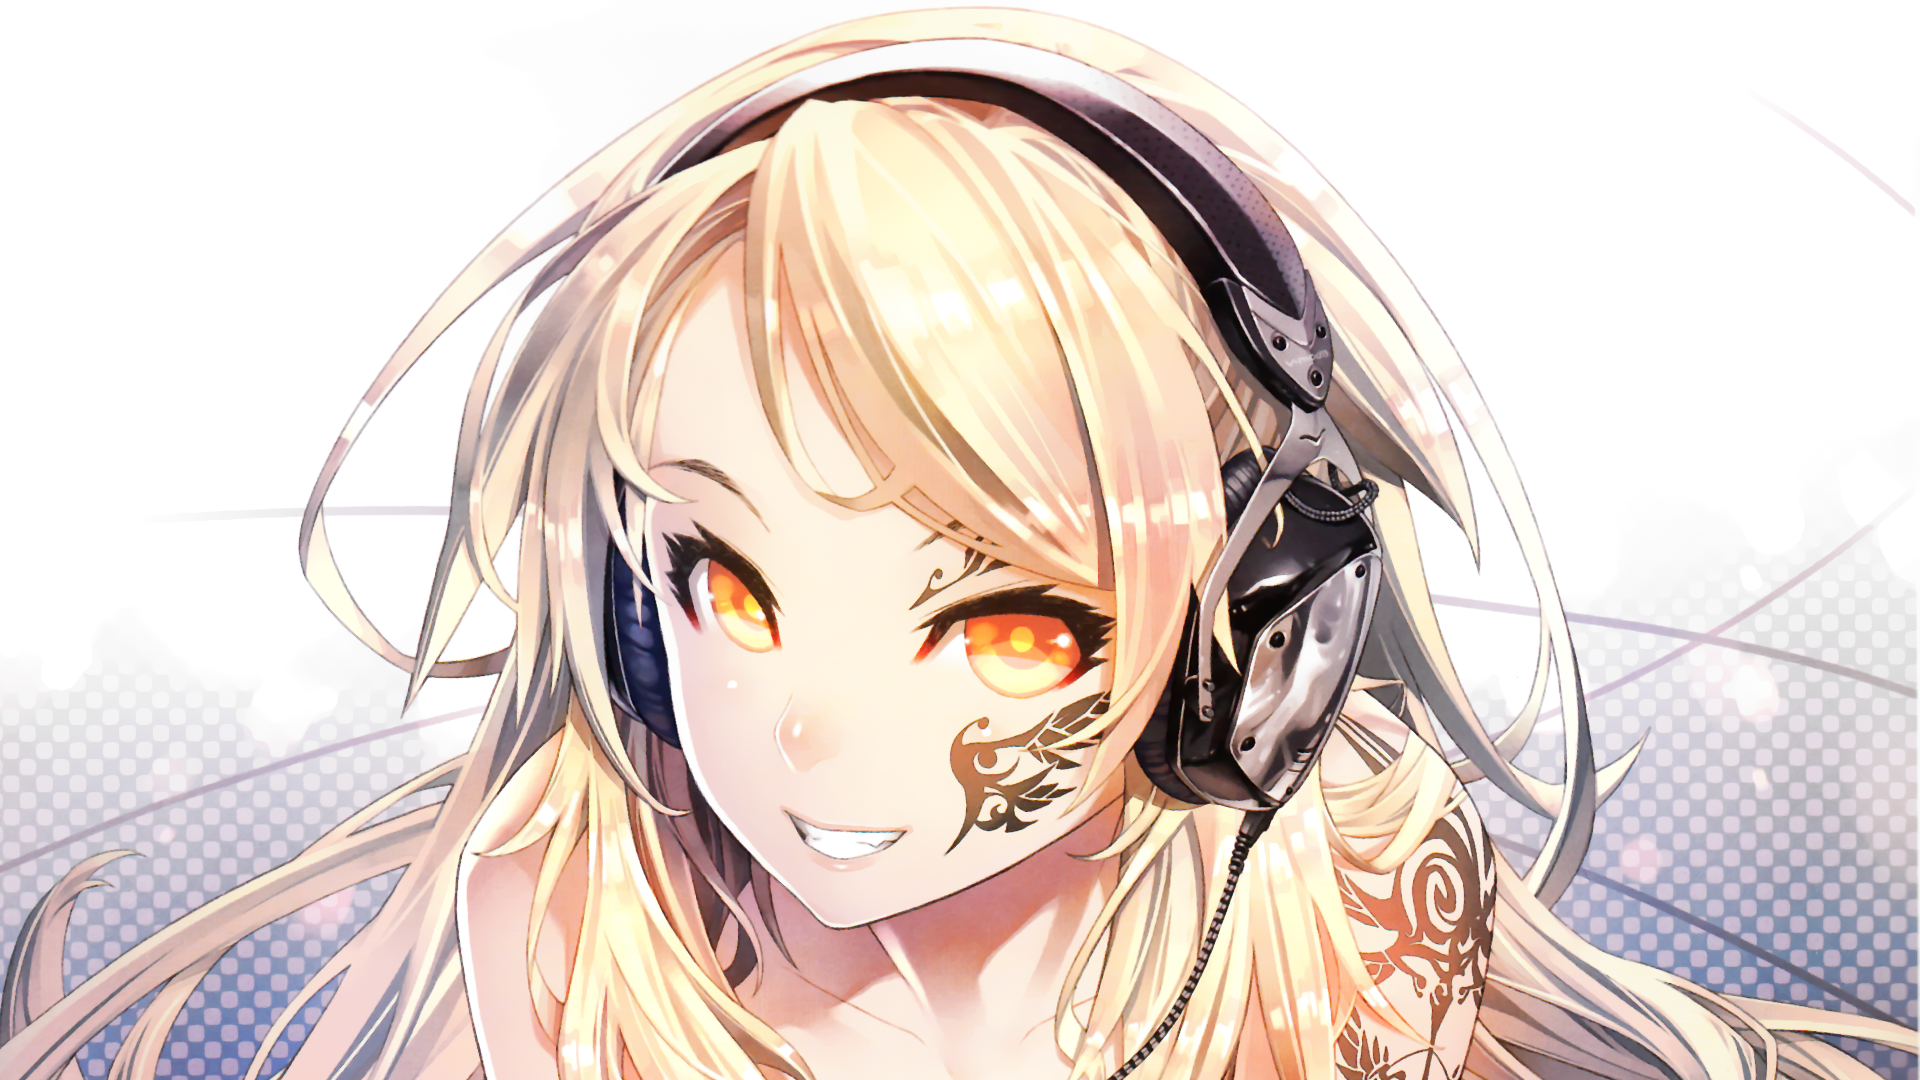 Anime 1920x1080 anime girls anime headphones yellow eyes blonde face closeup white background smiling inked girls orange eyes